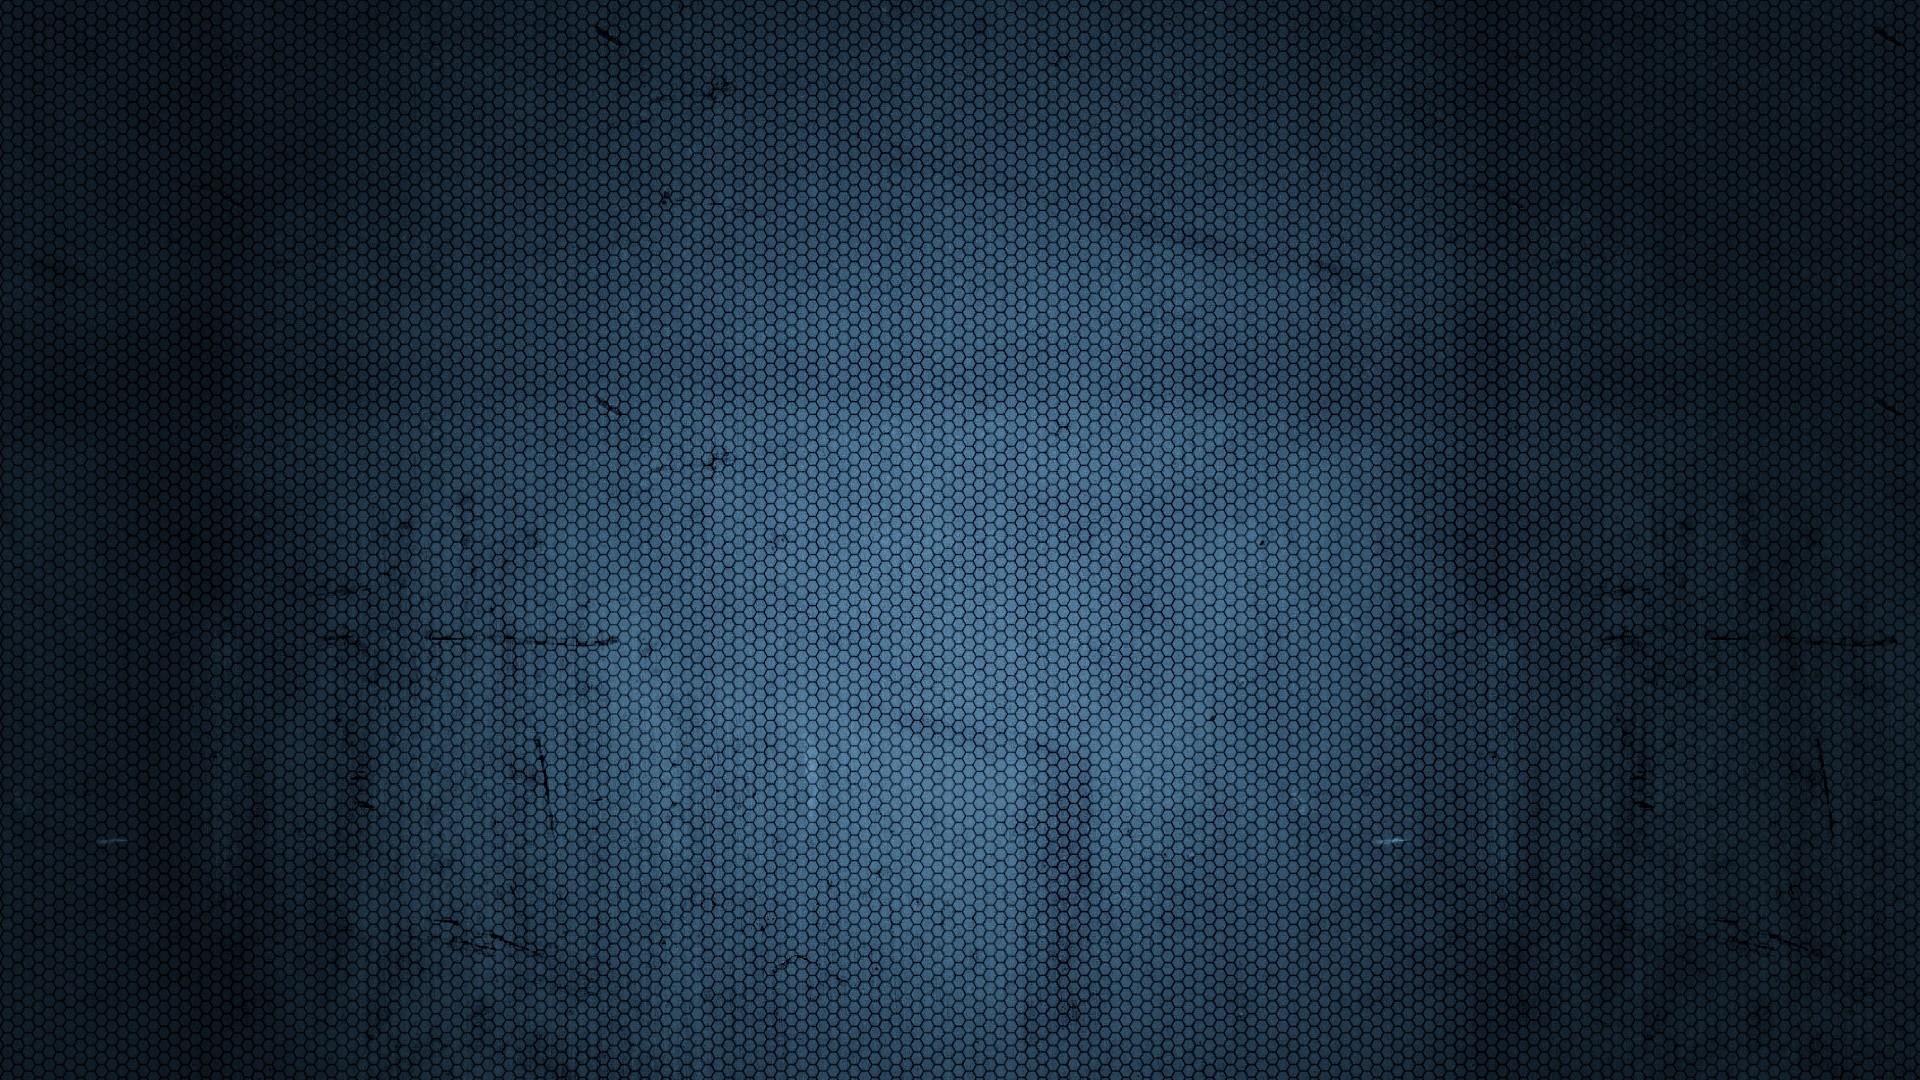 Awesome Dark Blue Texture Wallpaper Hd wallpaper